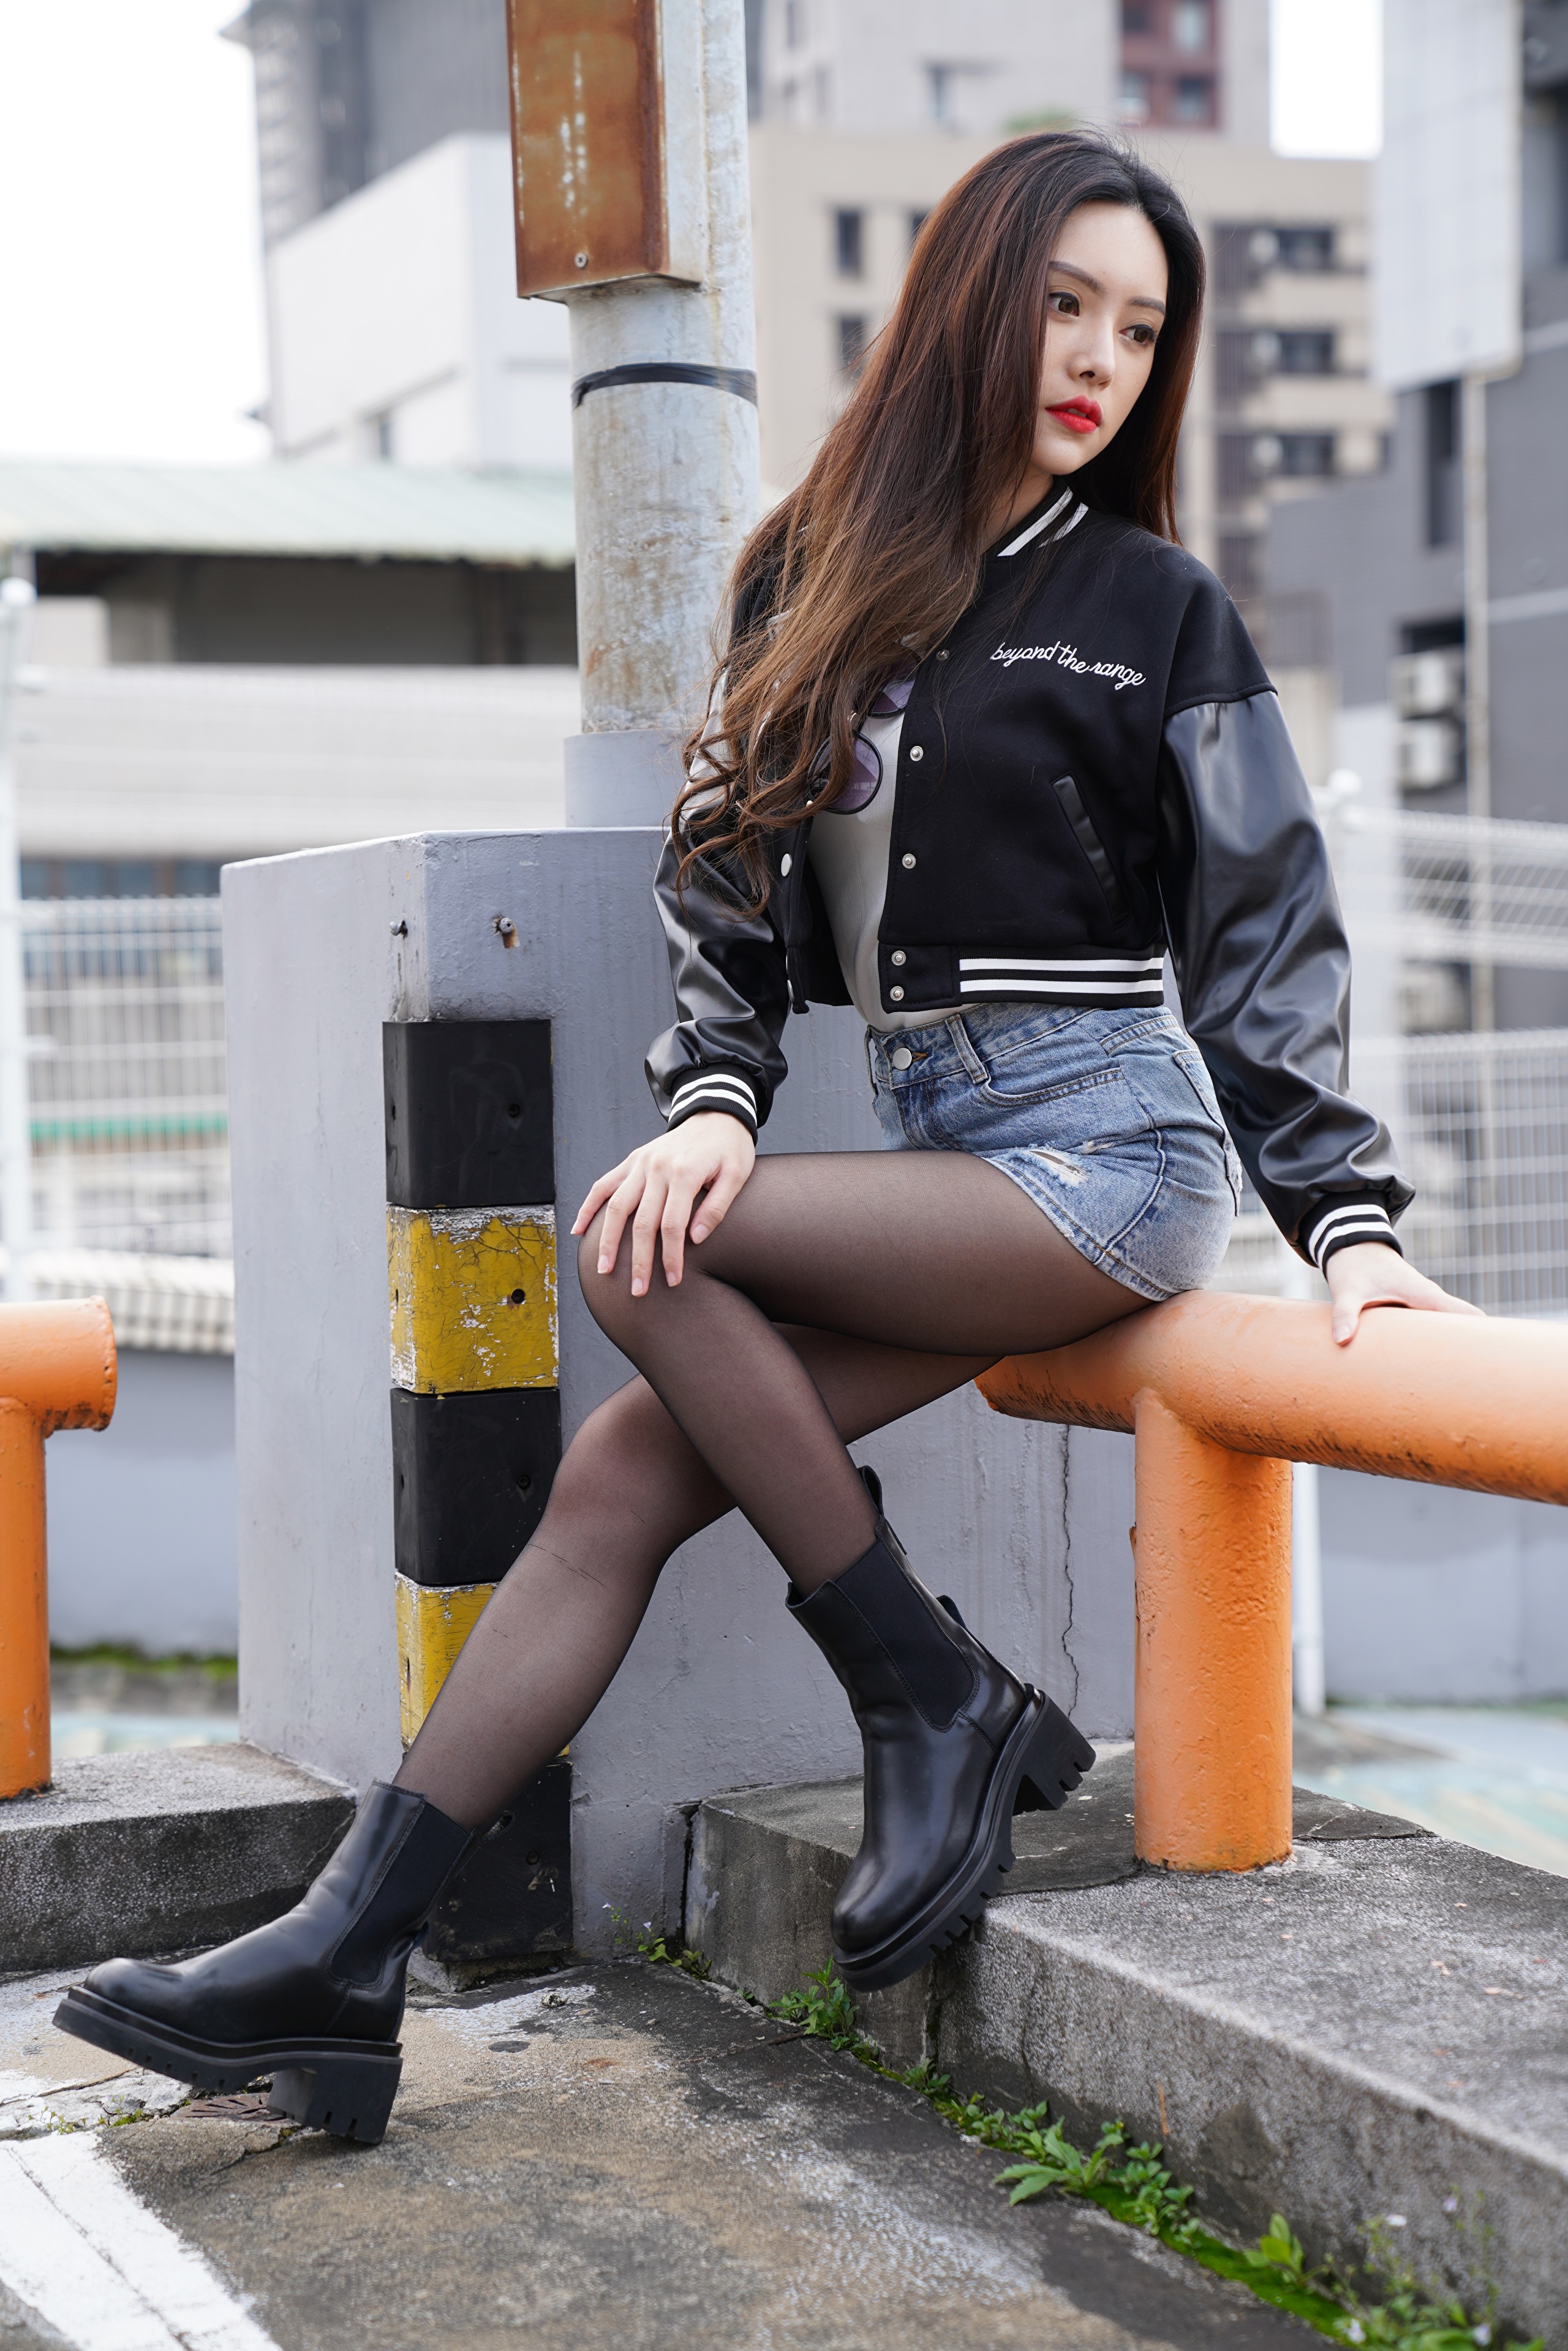 Asian Model Women Long Hair Dark Hair Nylons Ankle Boots Jean Shorts Letterman Jacket Iron Railing S 2560x3838